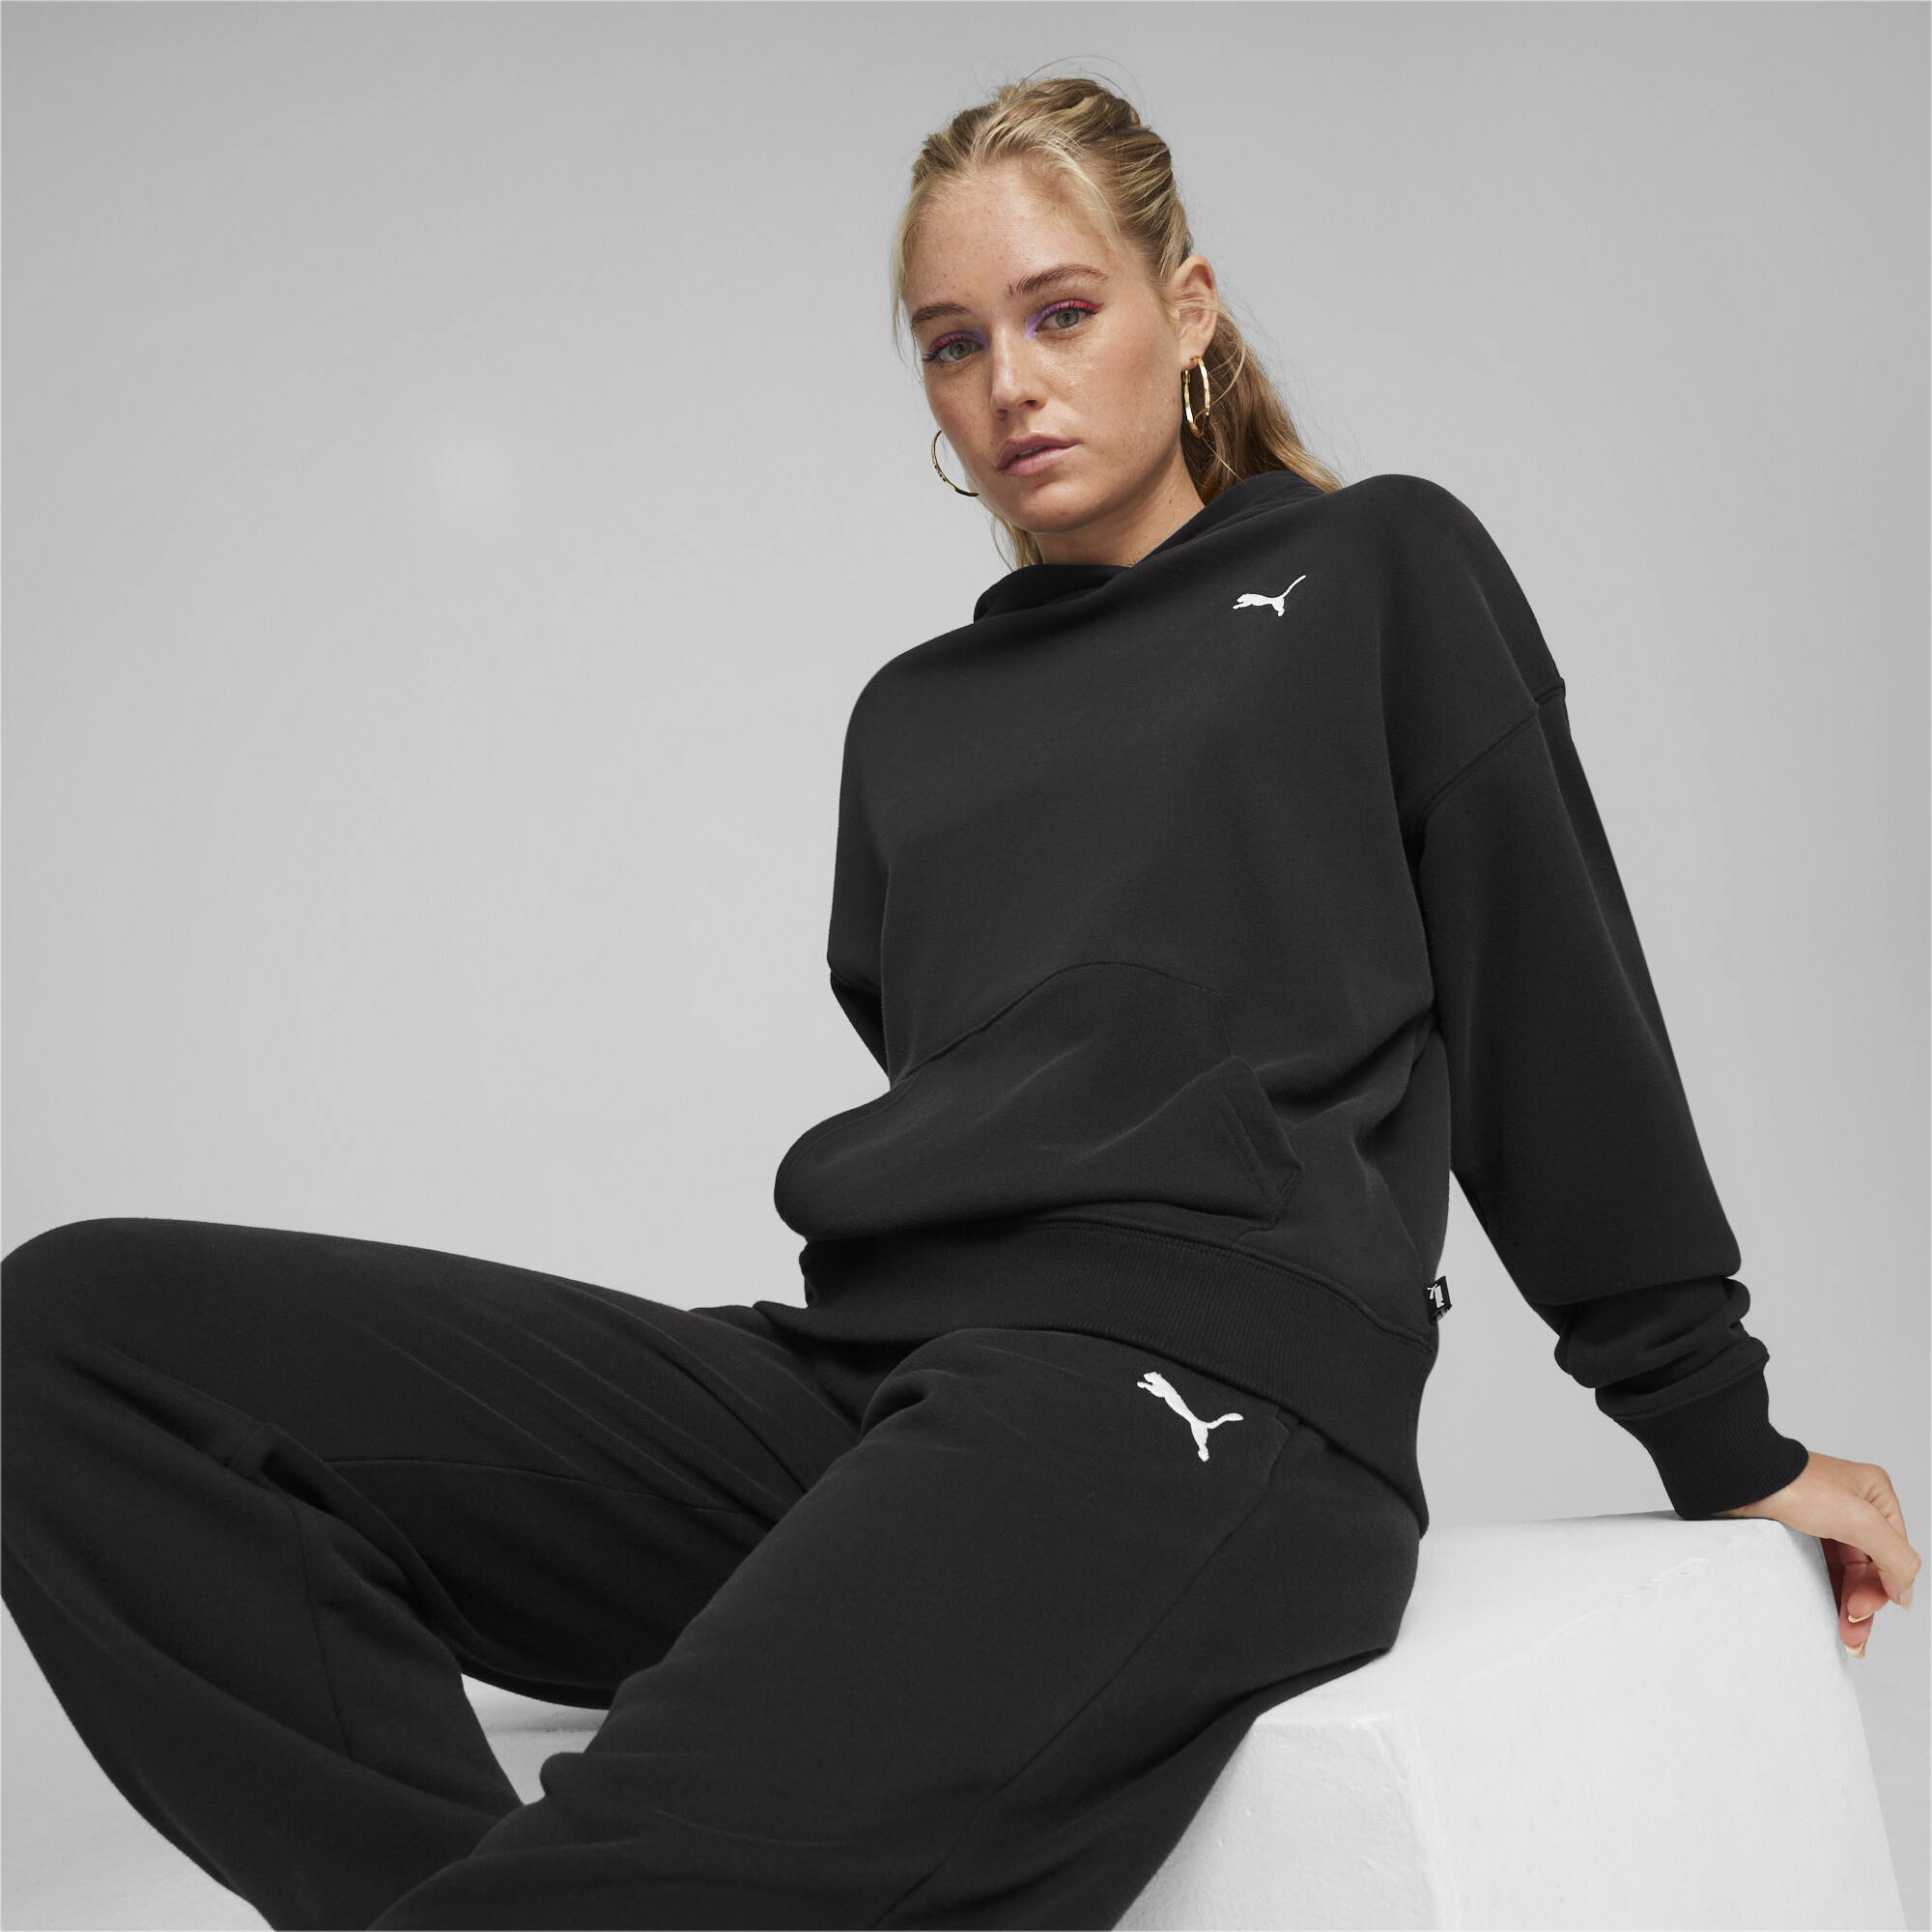 Women's Puma Loungewear's Track Suit, Black, Size L, Clothing